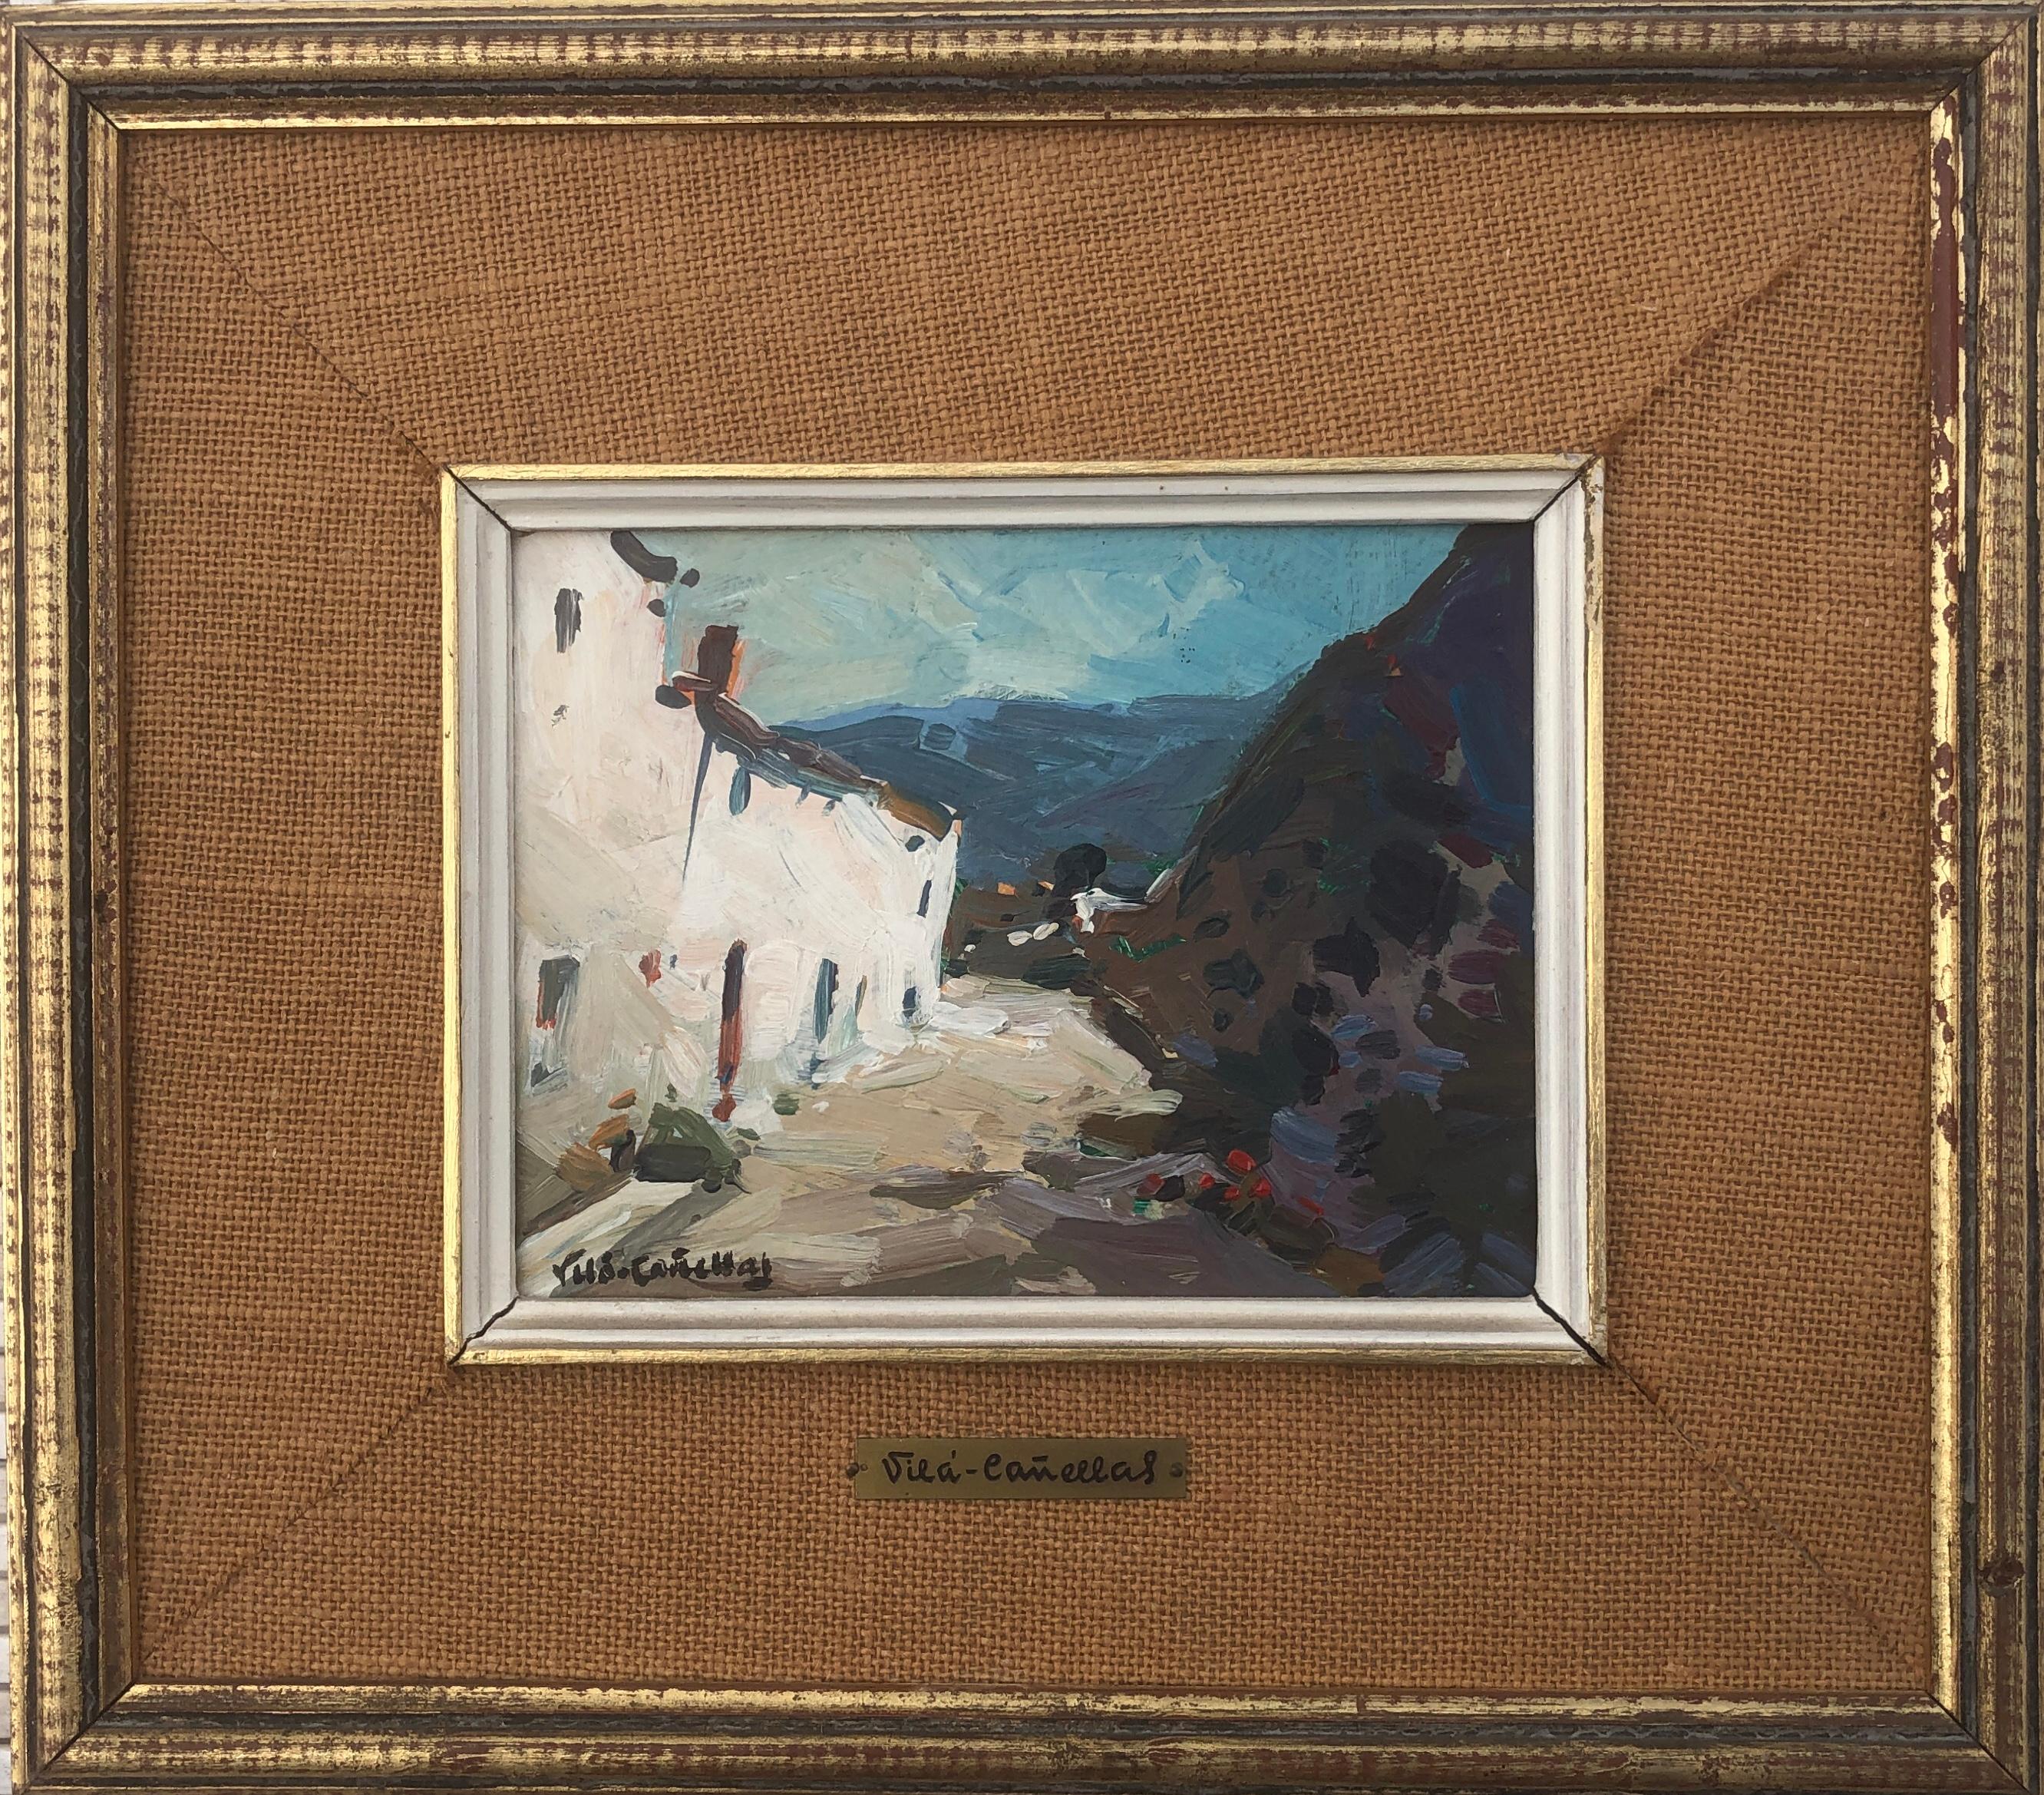 Canyelles Sitges Spain landscape original oil on board painting - Painting by José María Vila Cañellas